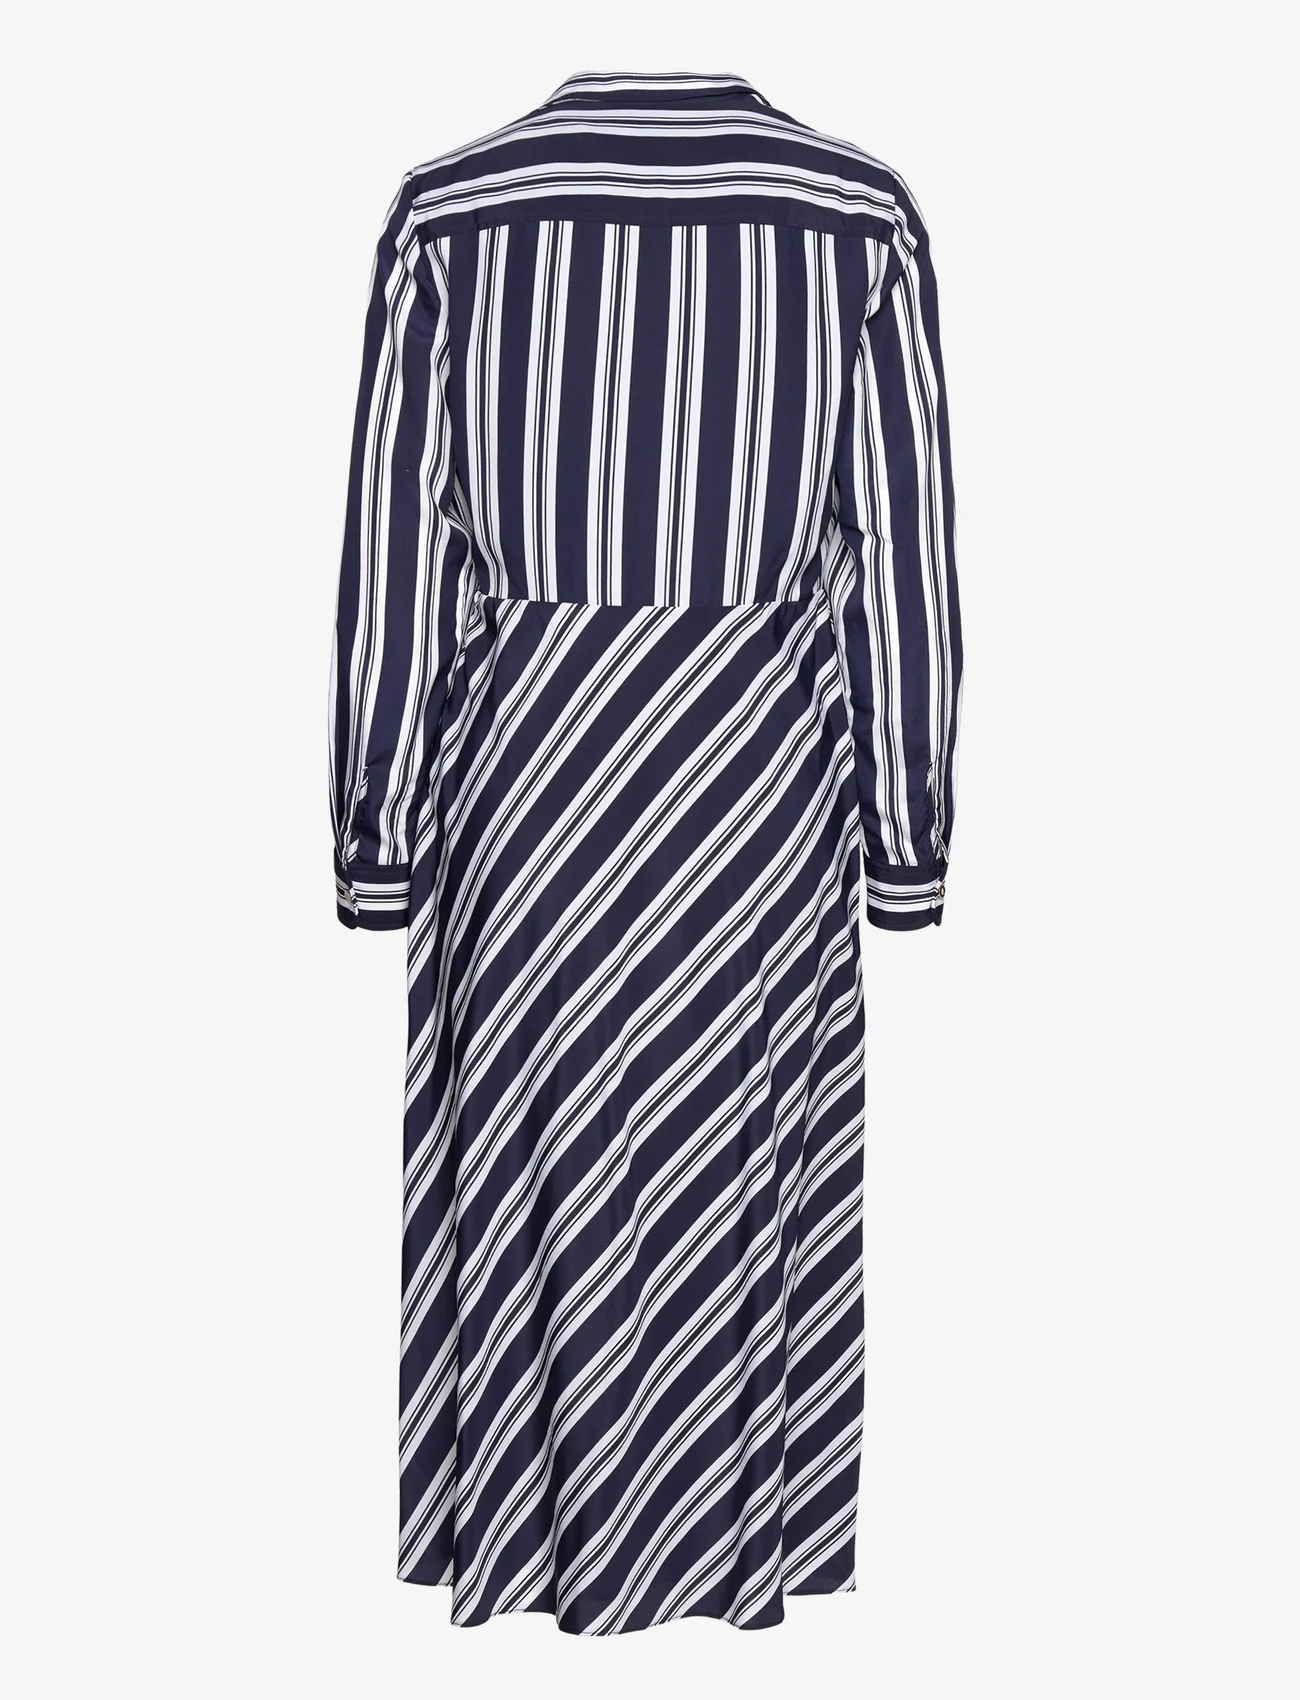 Lauren Ralph Lauren - Striped Tie-Front Crepe Midi Dress - hõlmikkleidid - navy/white - 1